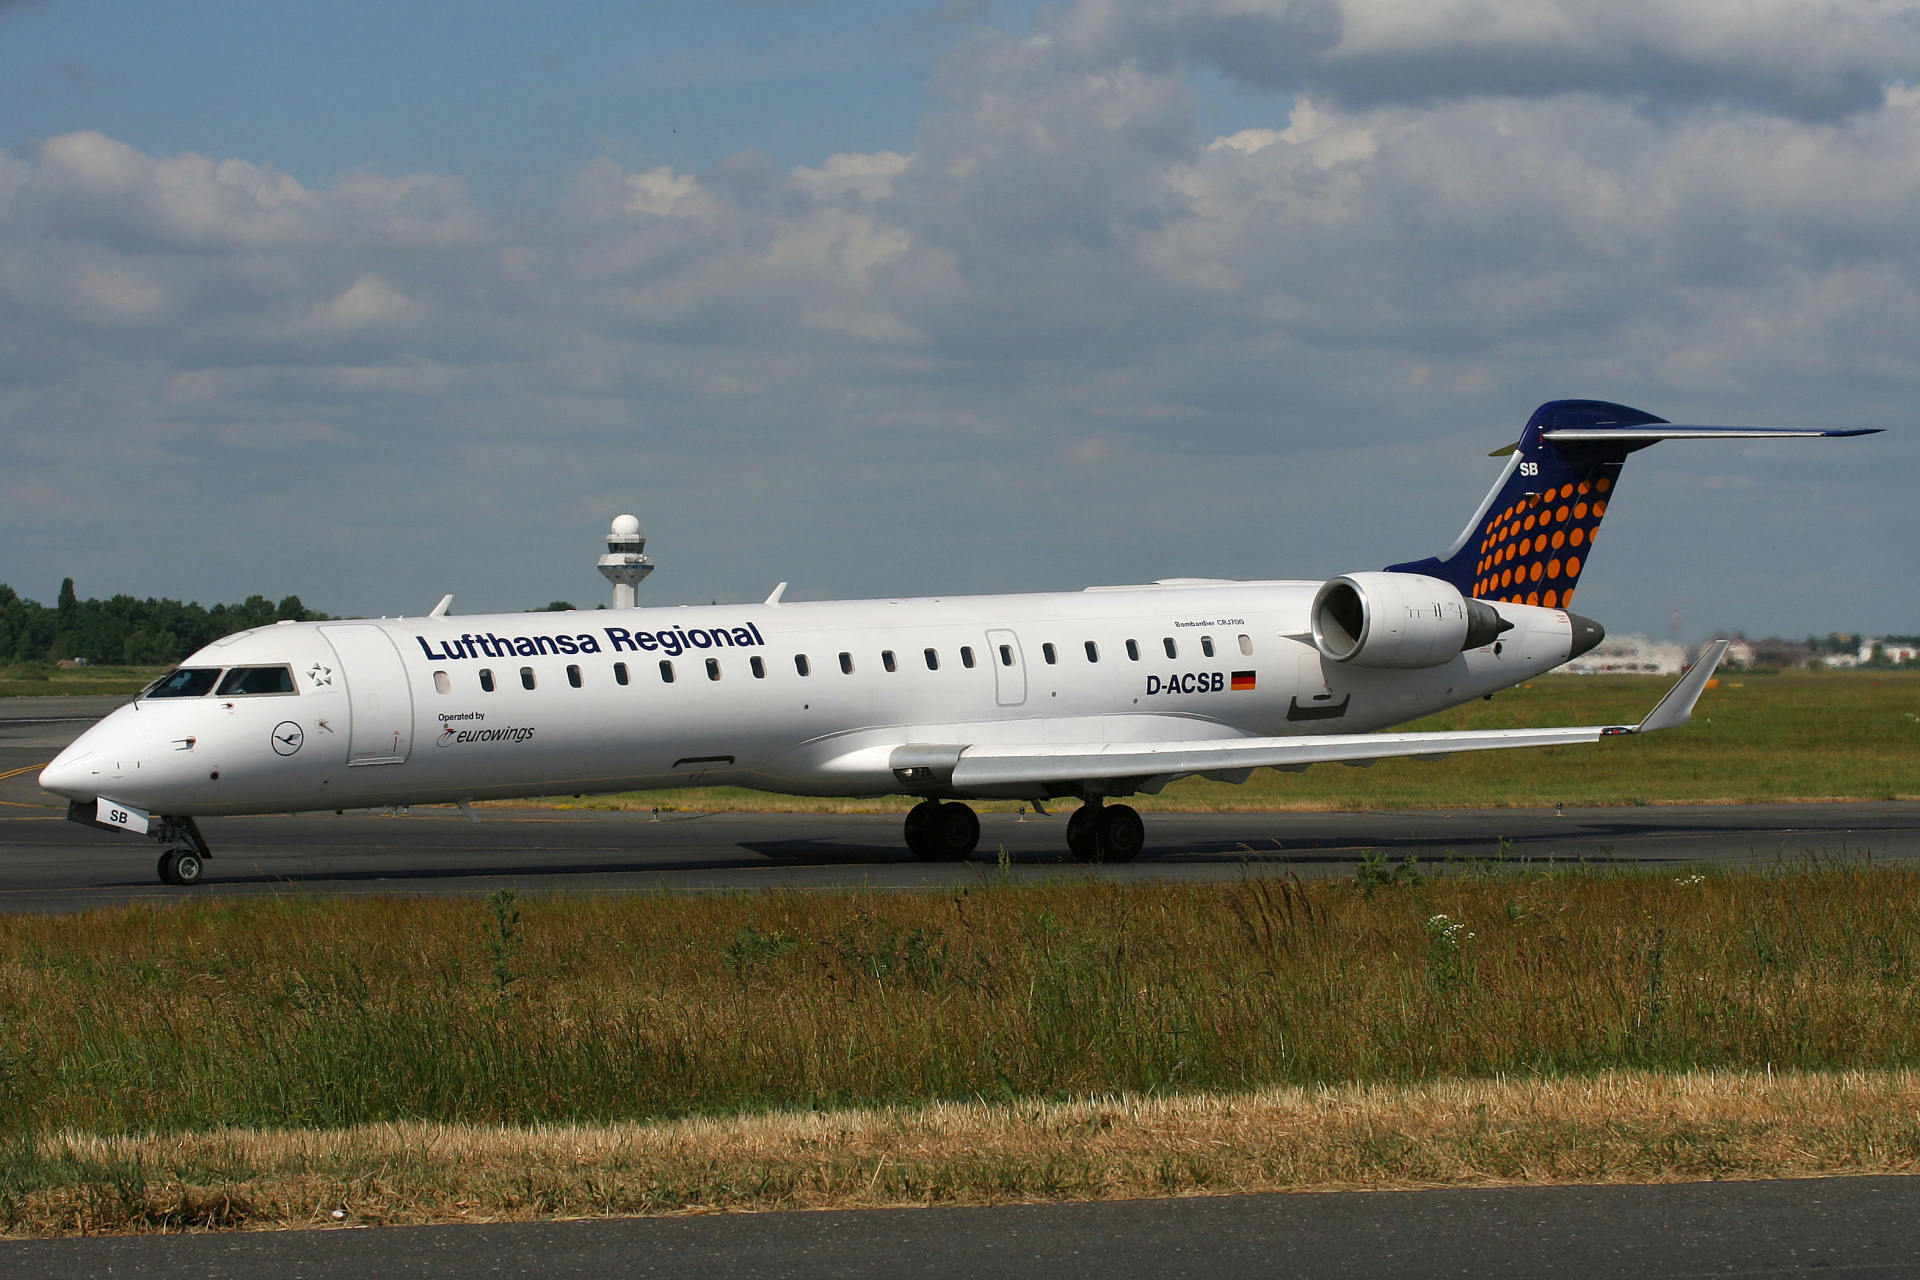 D-ACSB, Lufthansa Regional (Eurowings) (Aircraft » EPWA Spotting » Mitsubishi Regional Jet » CRJ-700)